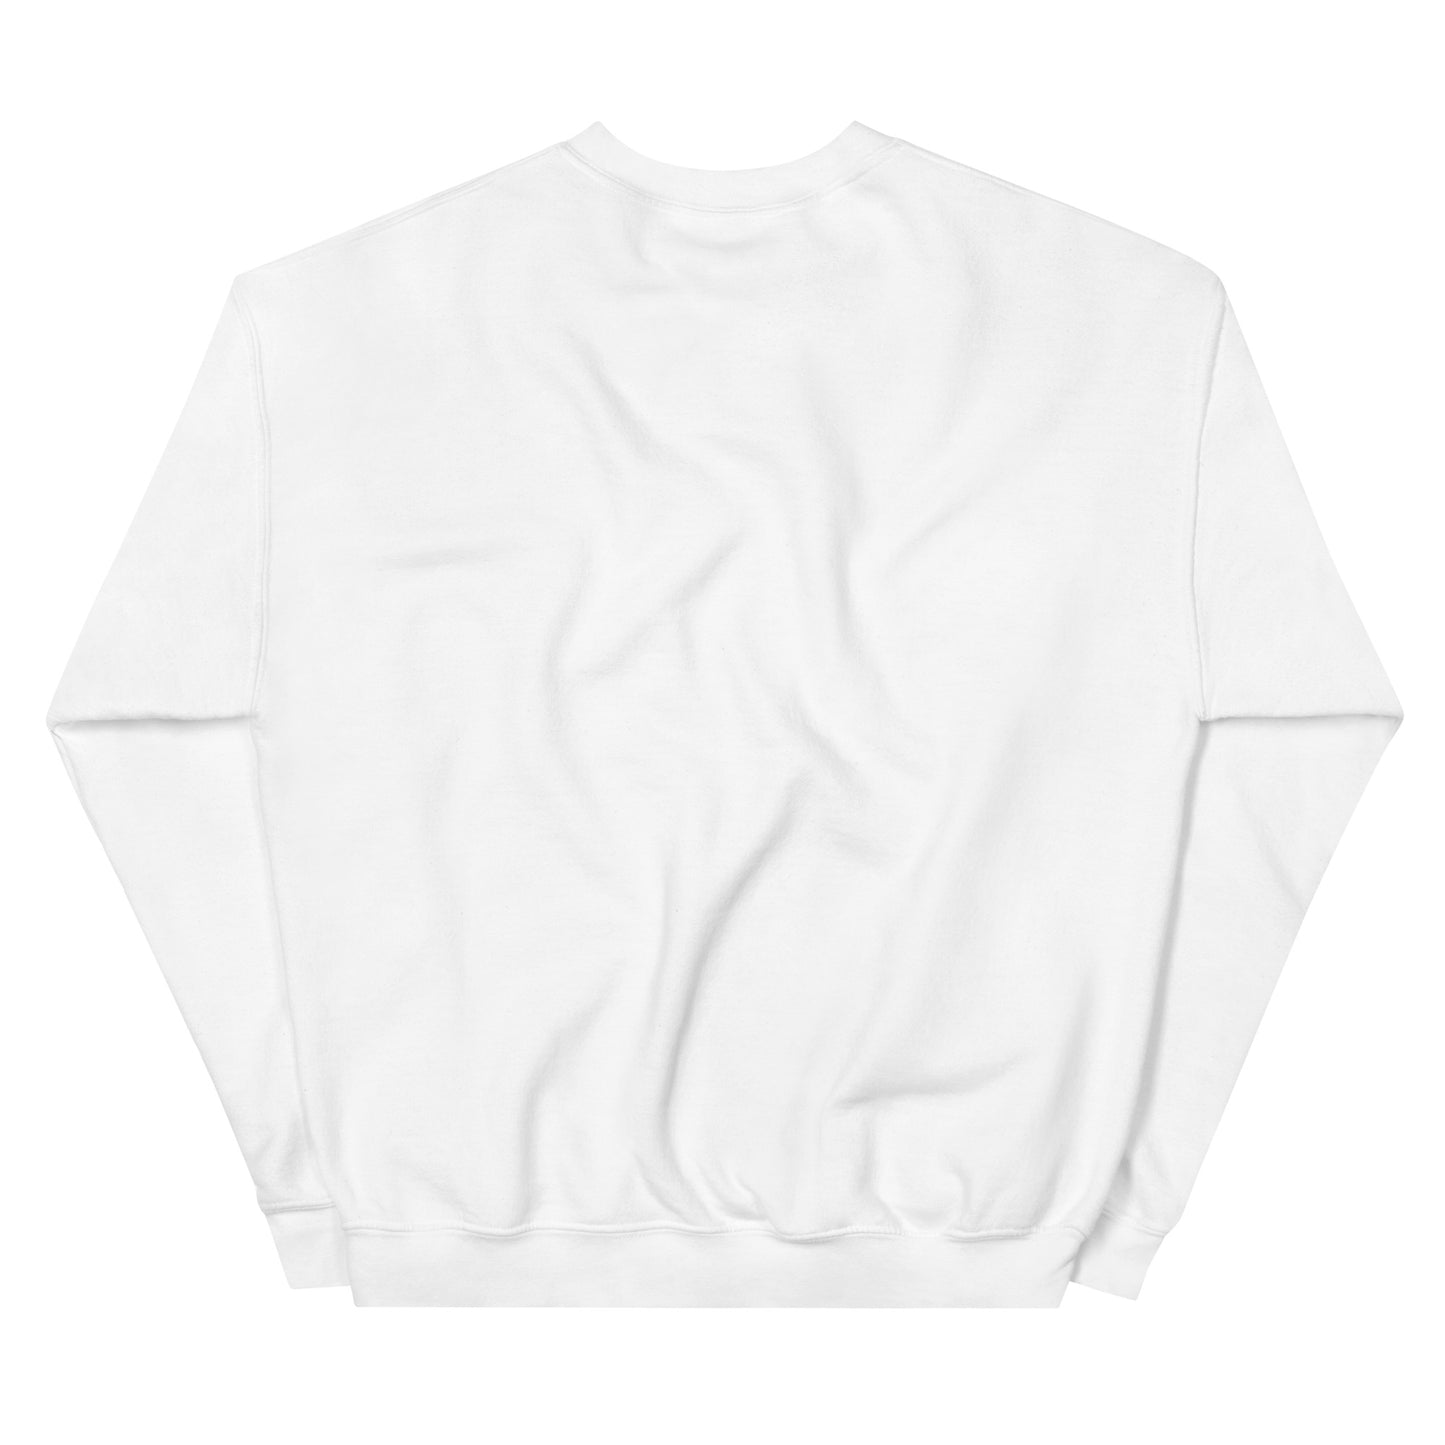 Unisex Sweatshirt Style